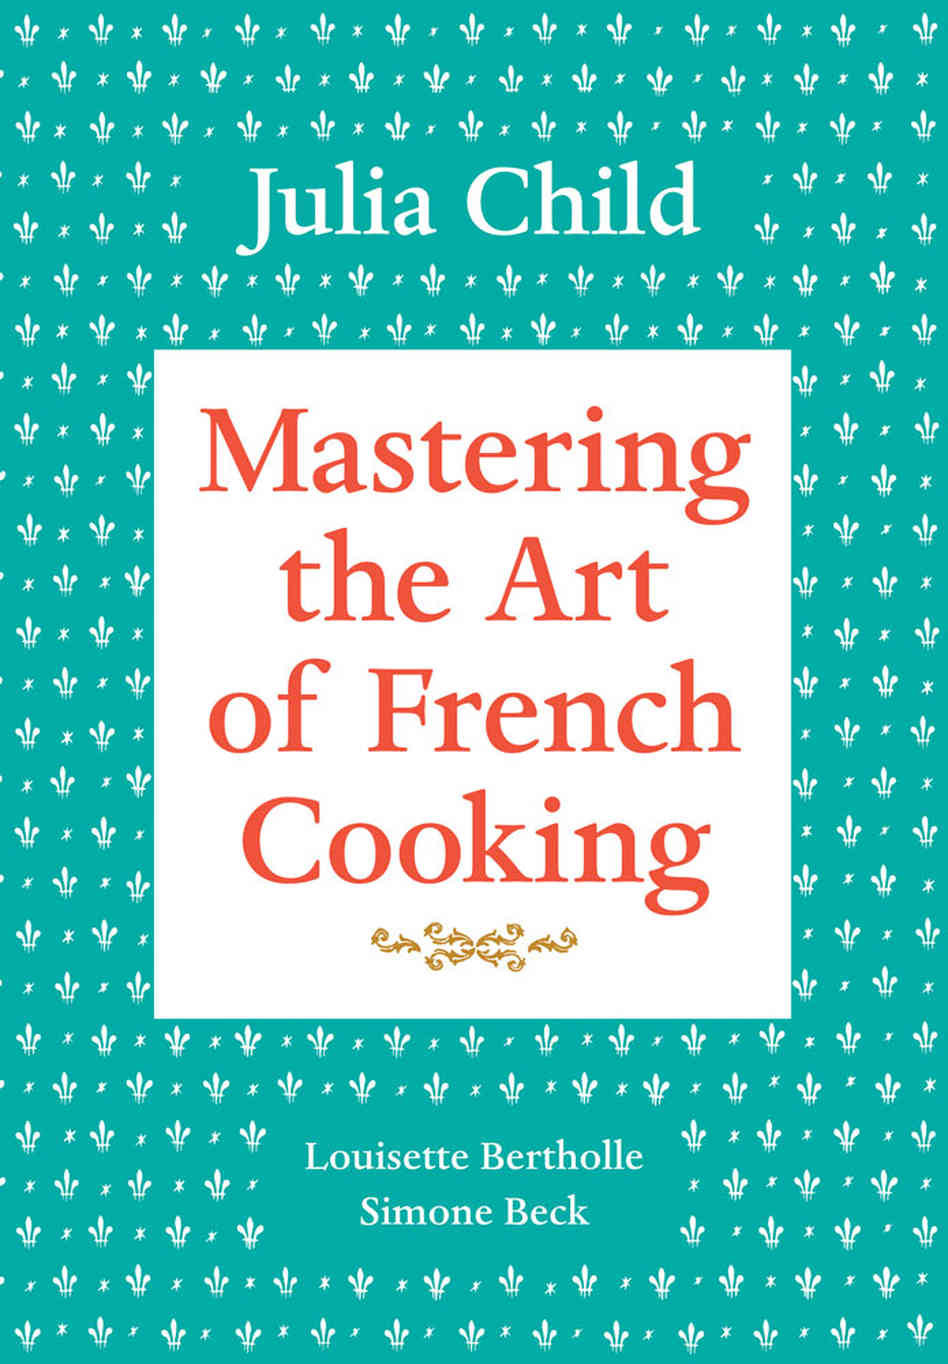 Julia Child Cookbook Recipes
 Nora Ephron s Favorite Julia Child Recipes NPR